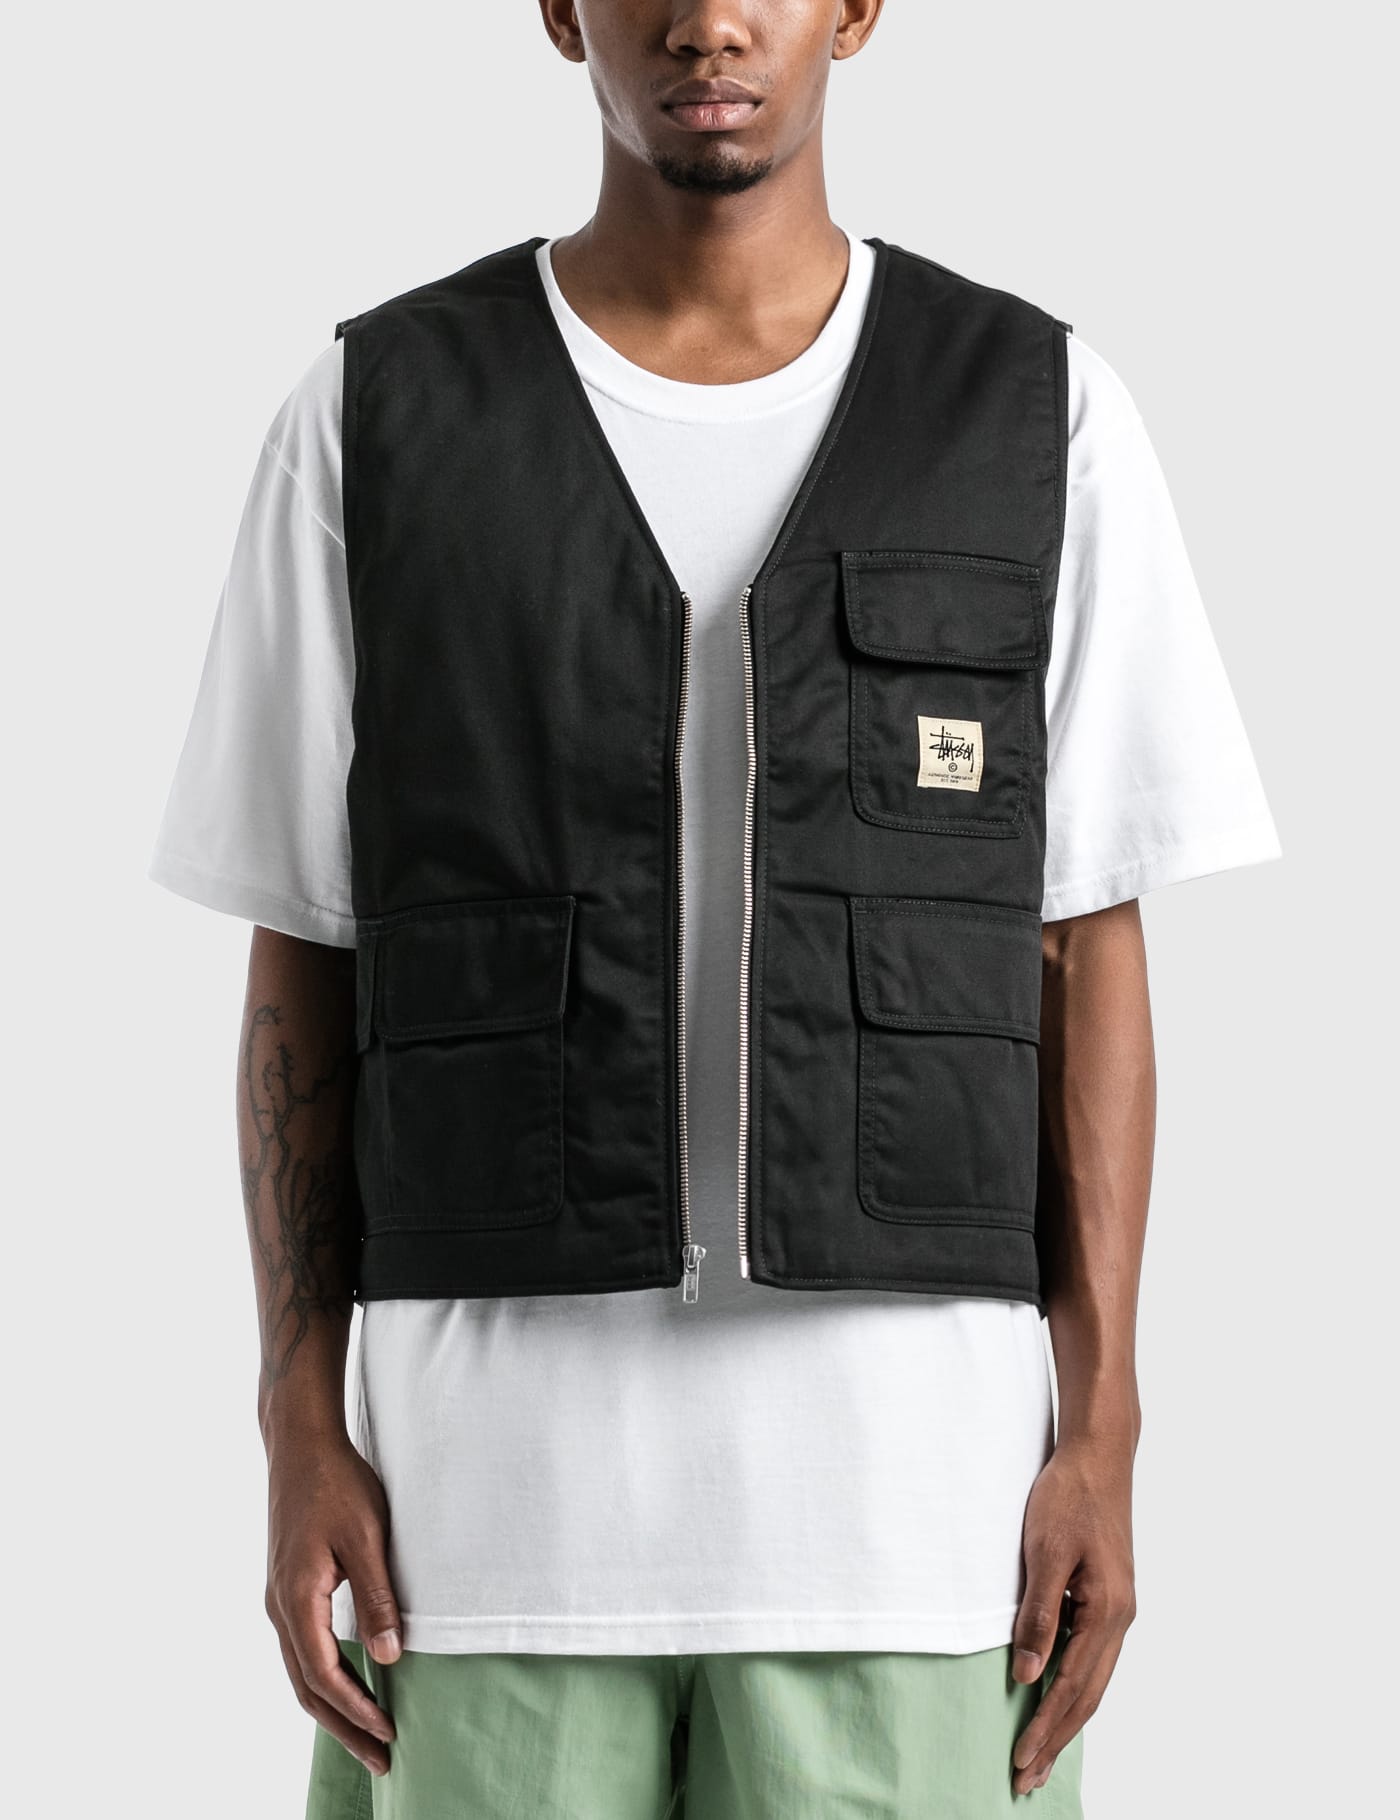 Insulated Work Vest